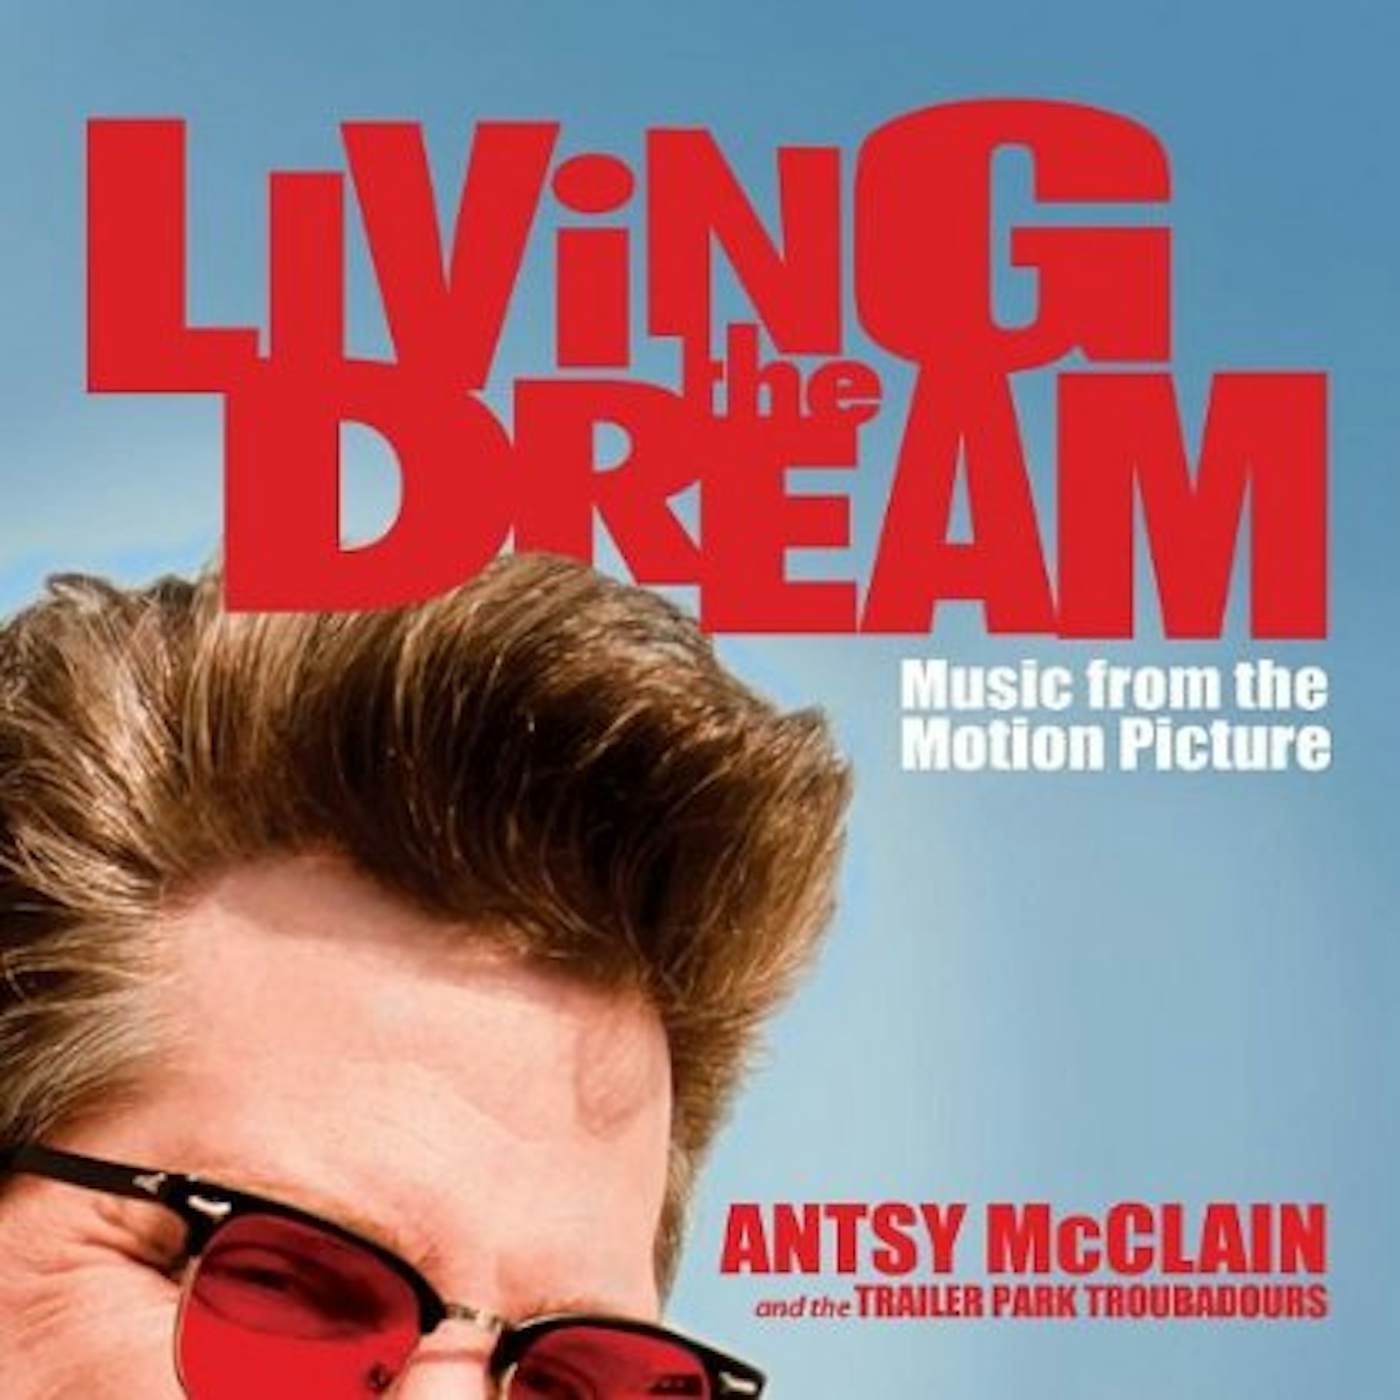 Antsy McClain LIVING THE DREAM CD